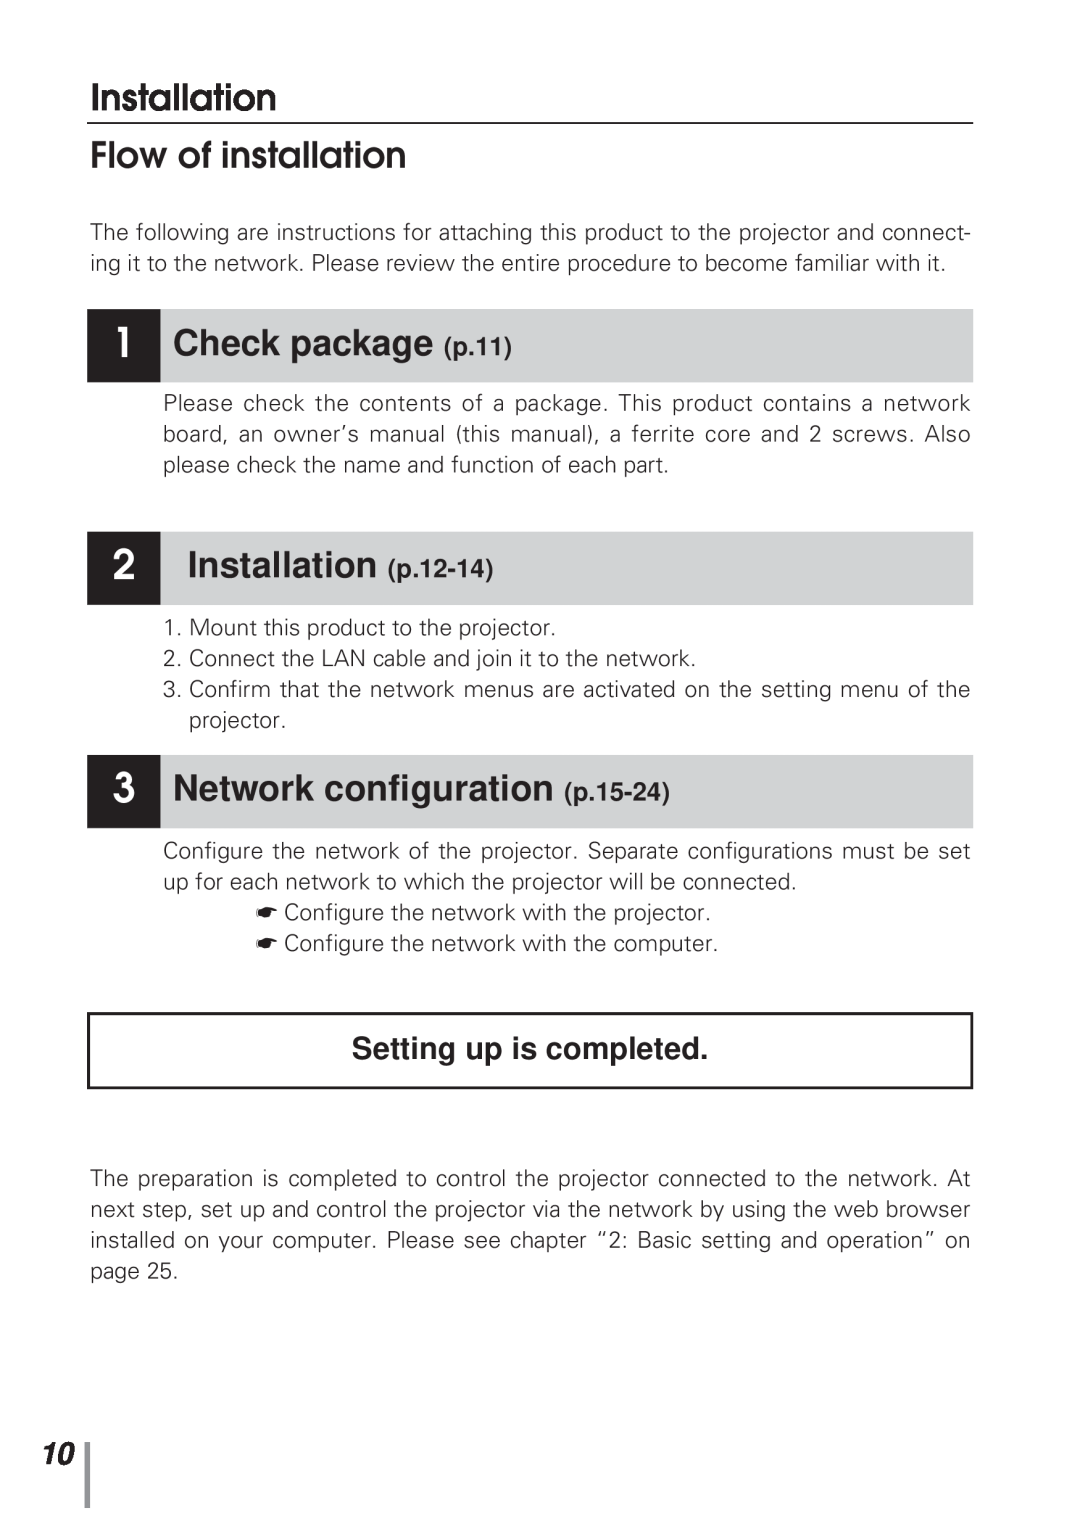 Eiki MD13NET Installation Flow of installation, 1Check package p.11, 2Installation p.12-14, 3Network configuration p.15-24 